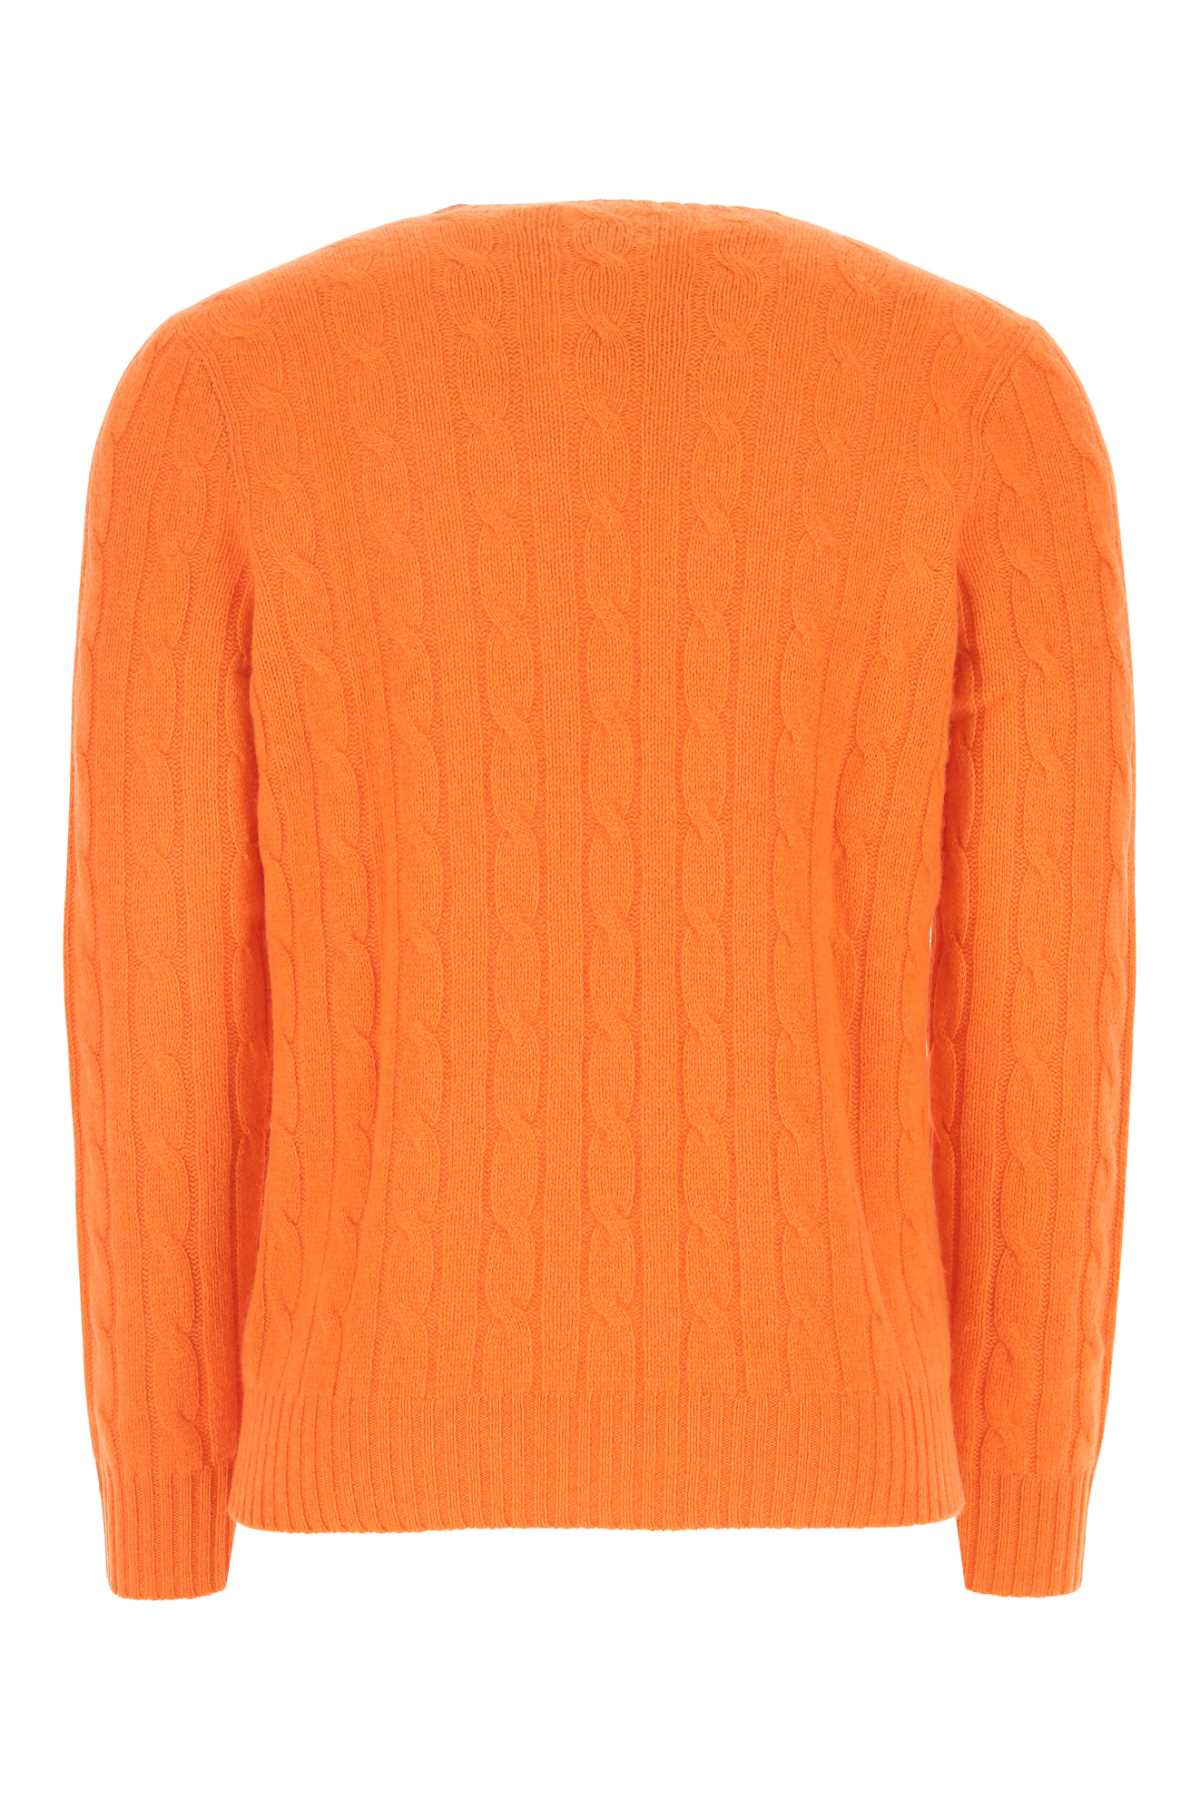 Polo Ralph Lauren Orange Cashmere Sweater In 014